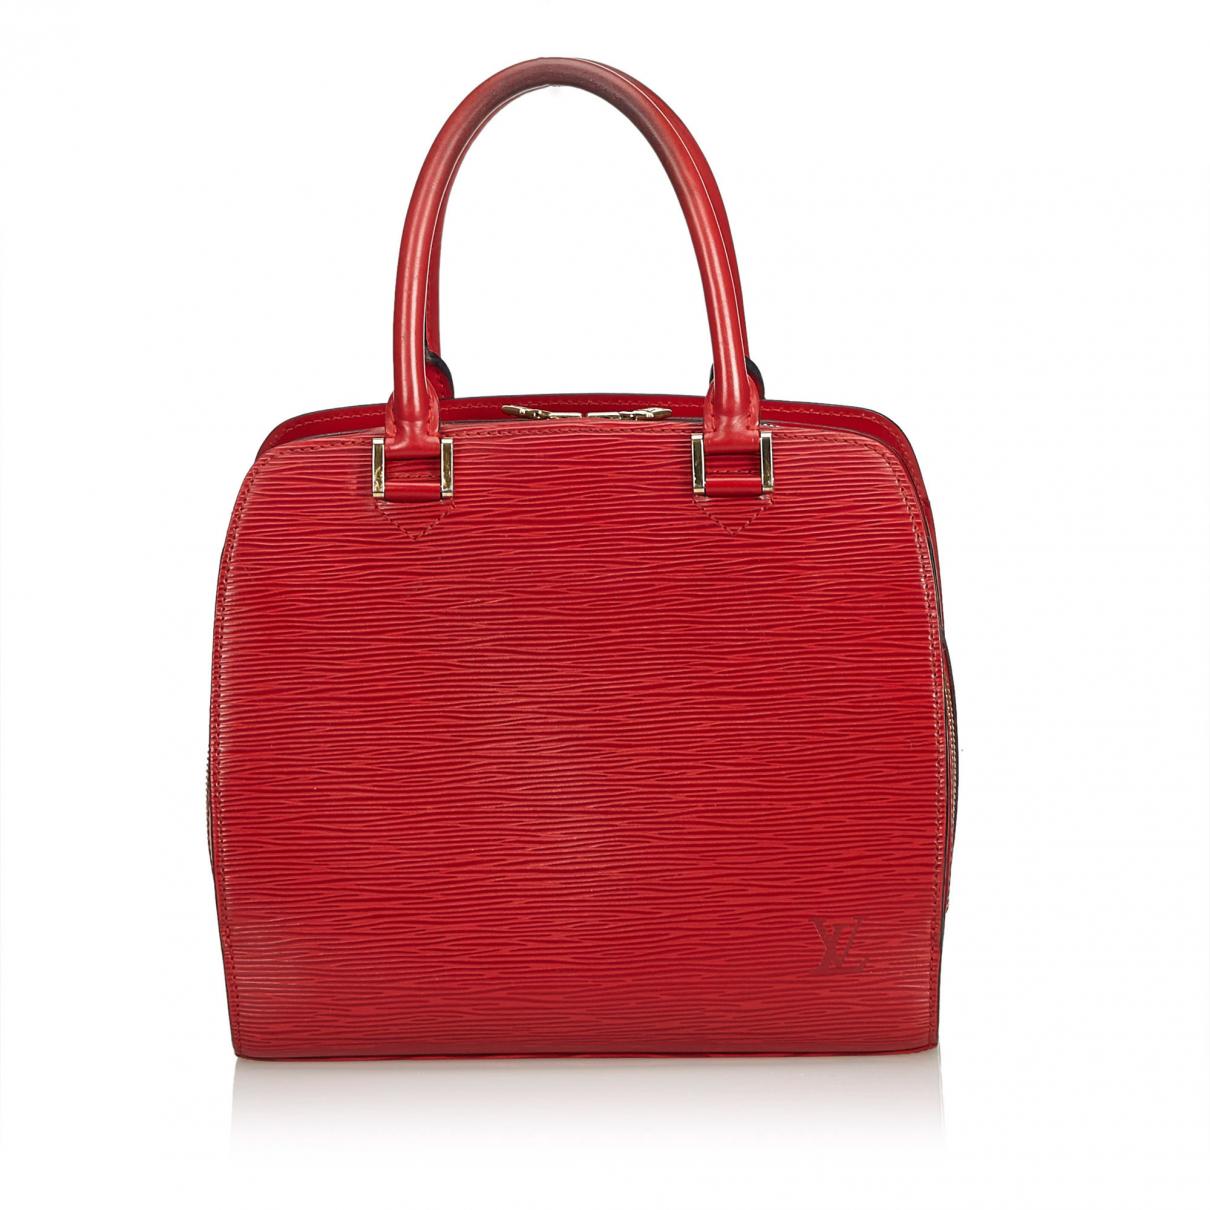 Lyst - Louis Vuitton Vintage Burgundy Leather Handbag in Red